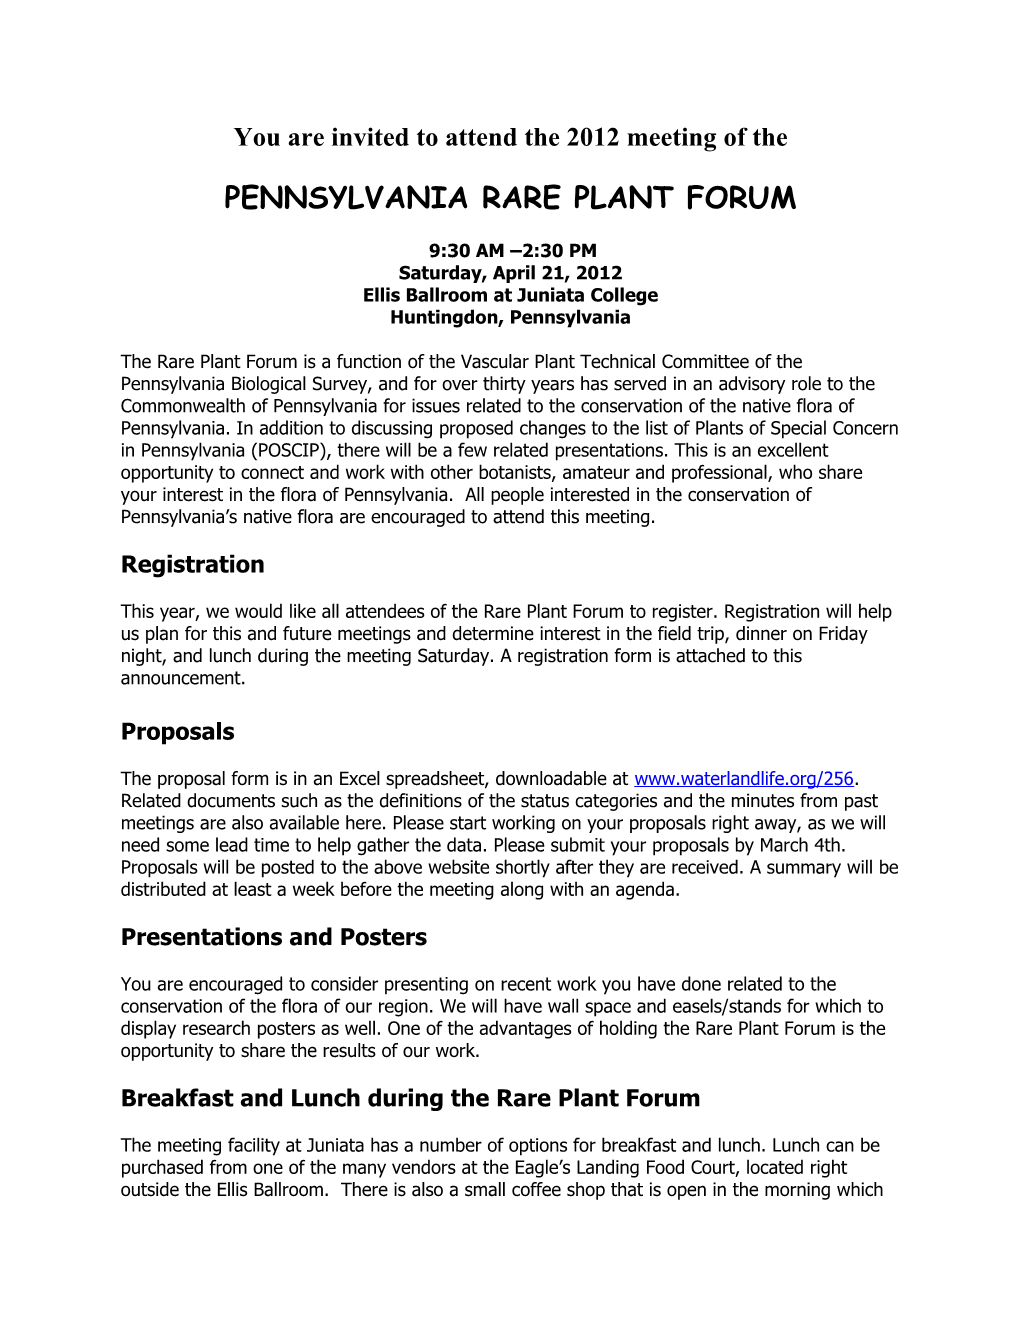 Pennsylvania Rare Plant Forum